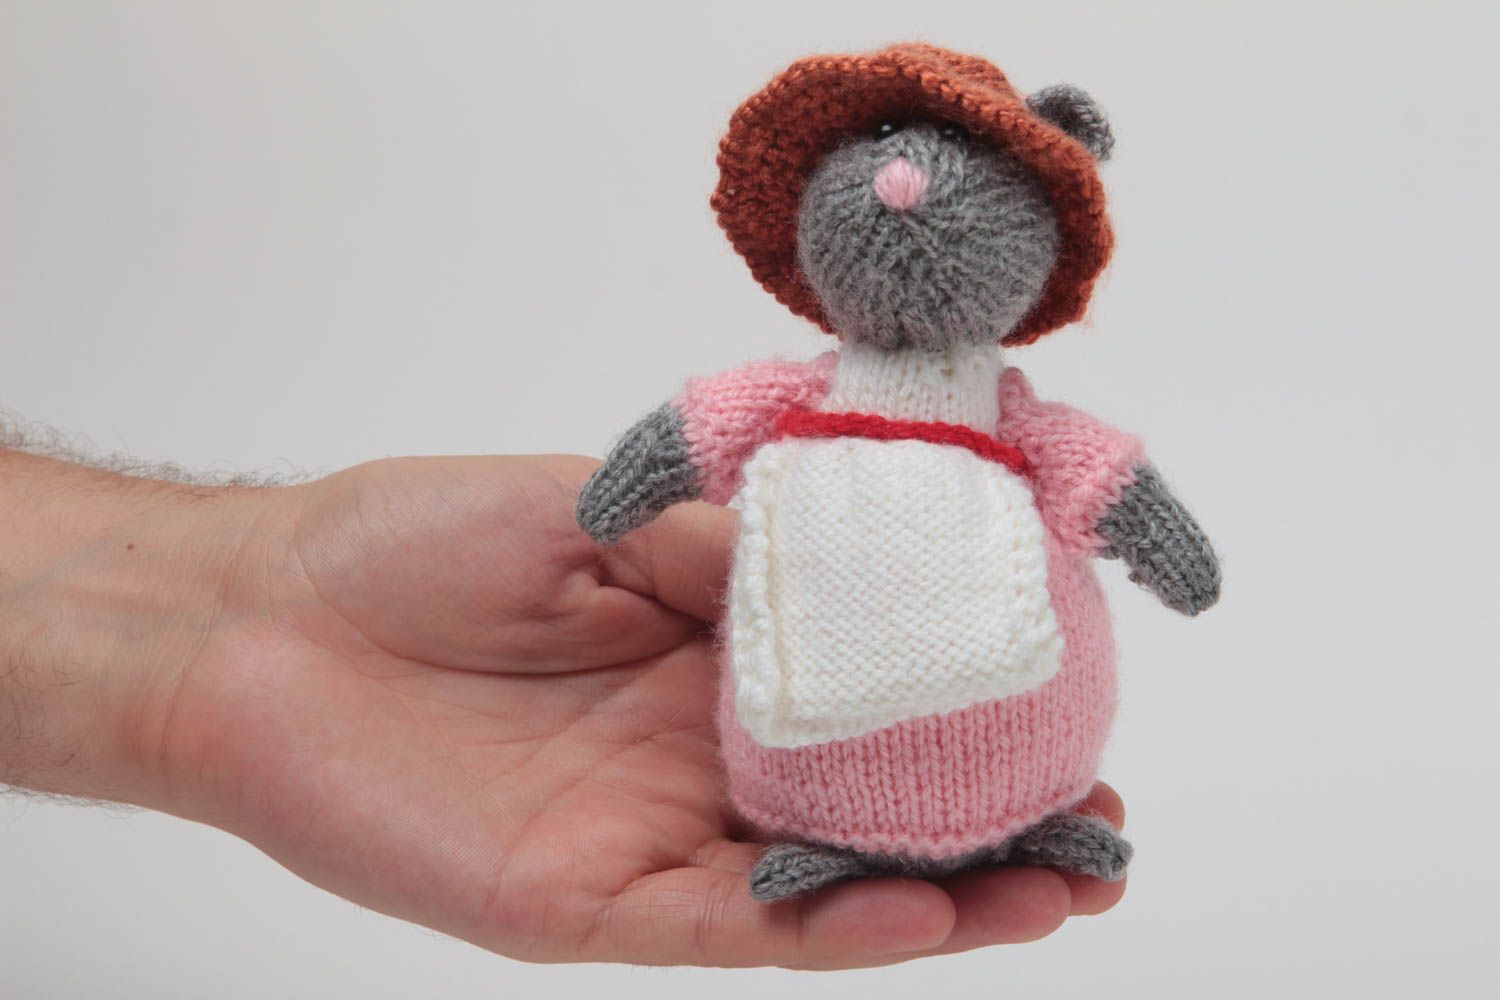 Handmade designer toy knitted soft toy for children decorative toy interior idea photo 5